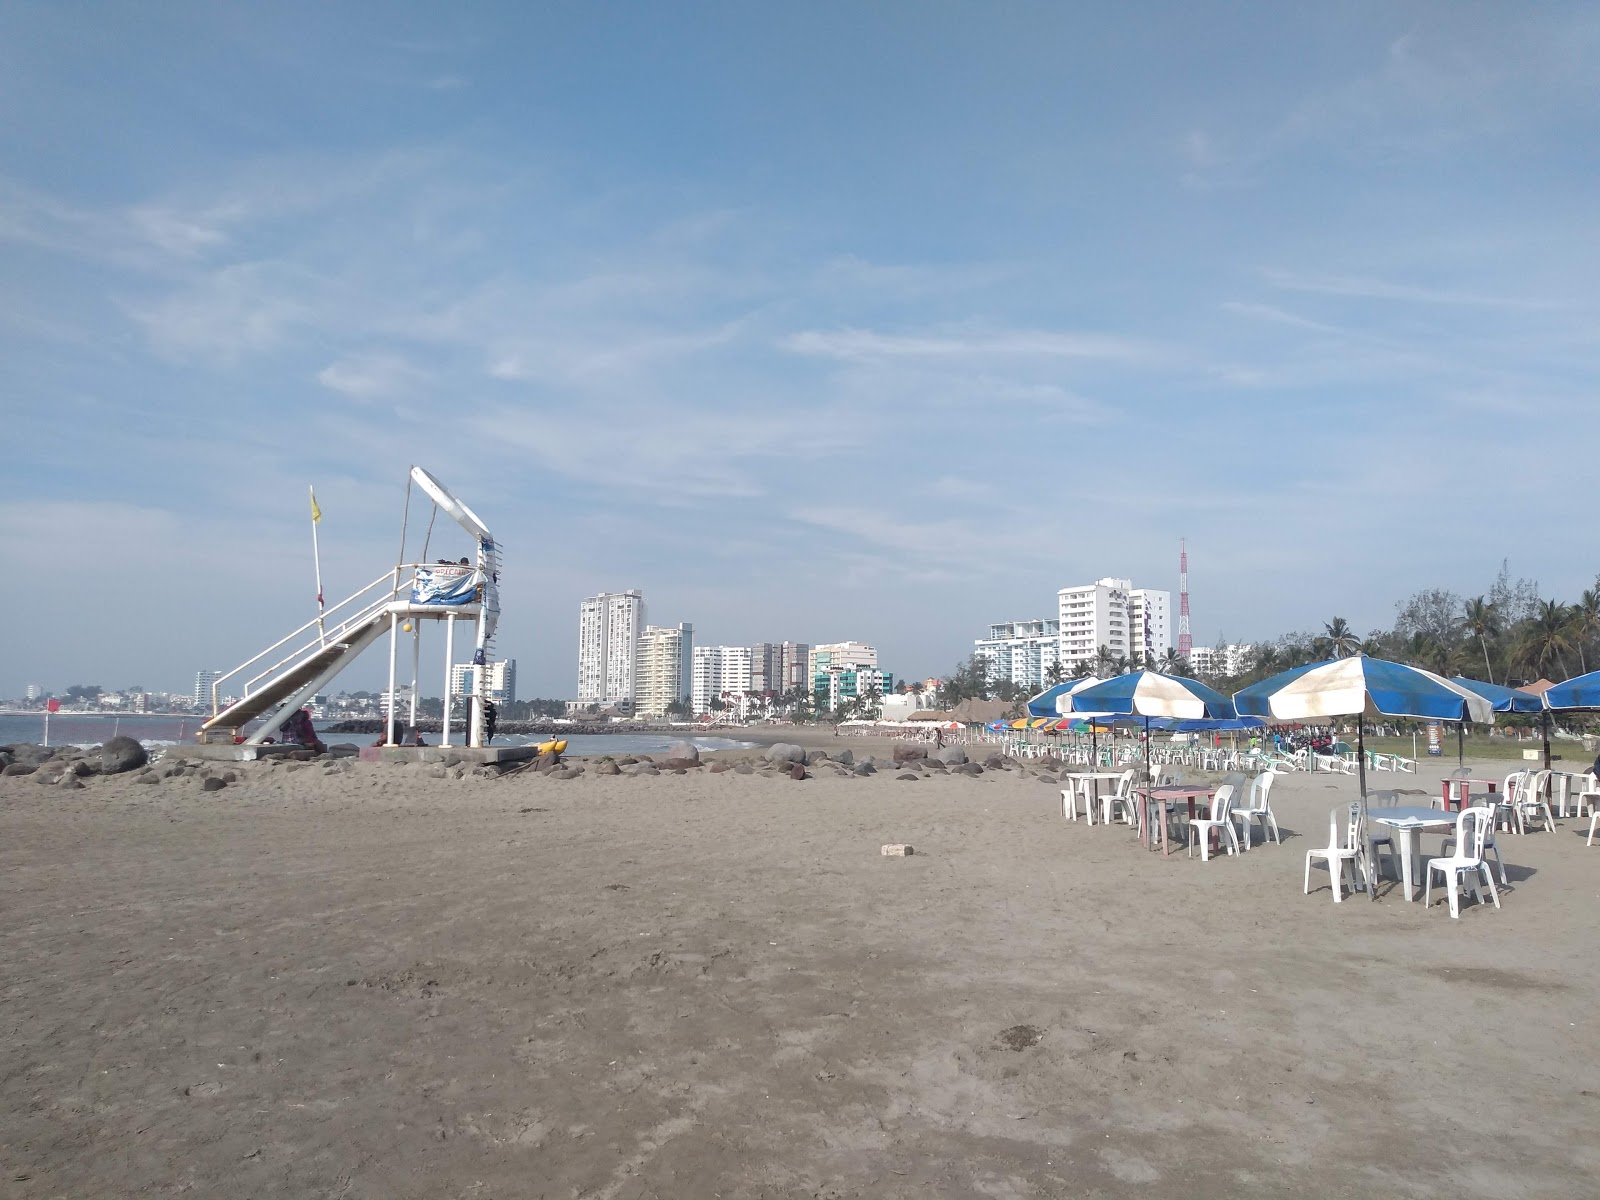 The beach area of Playa Mocambo